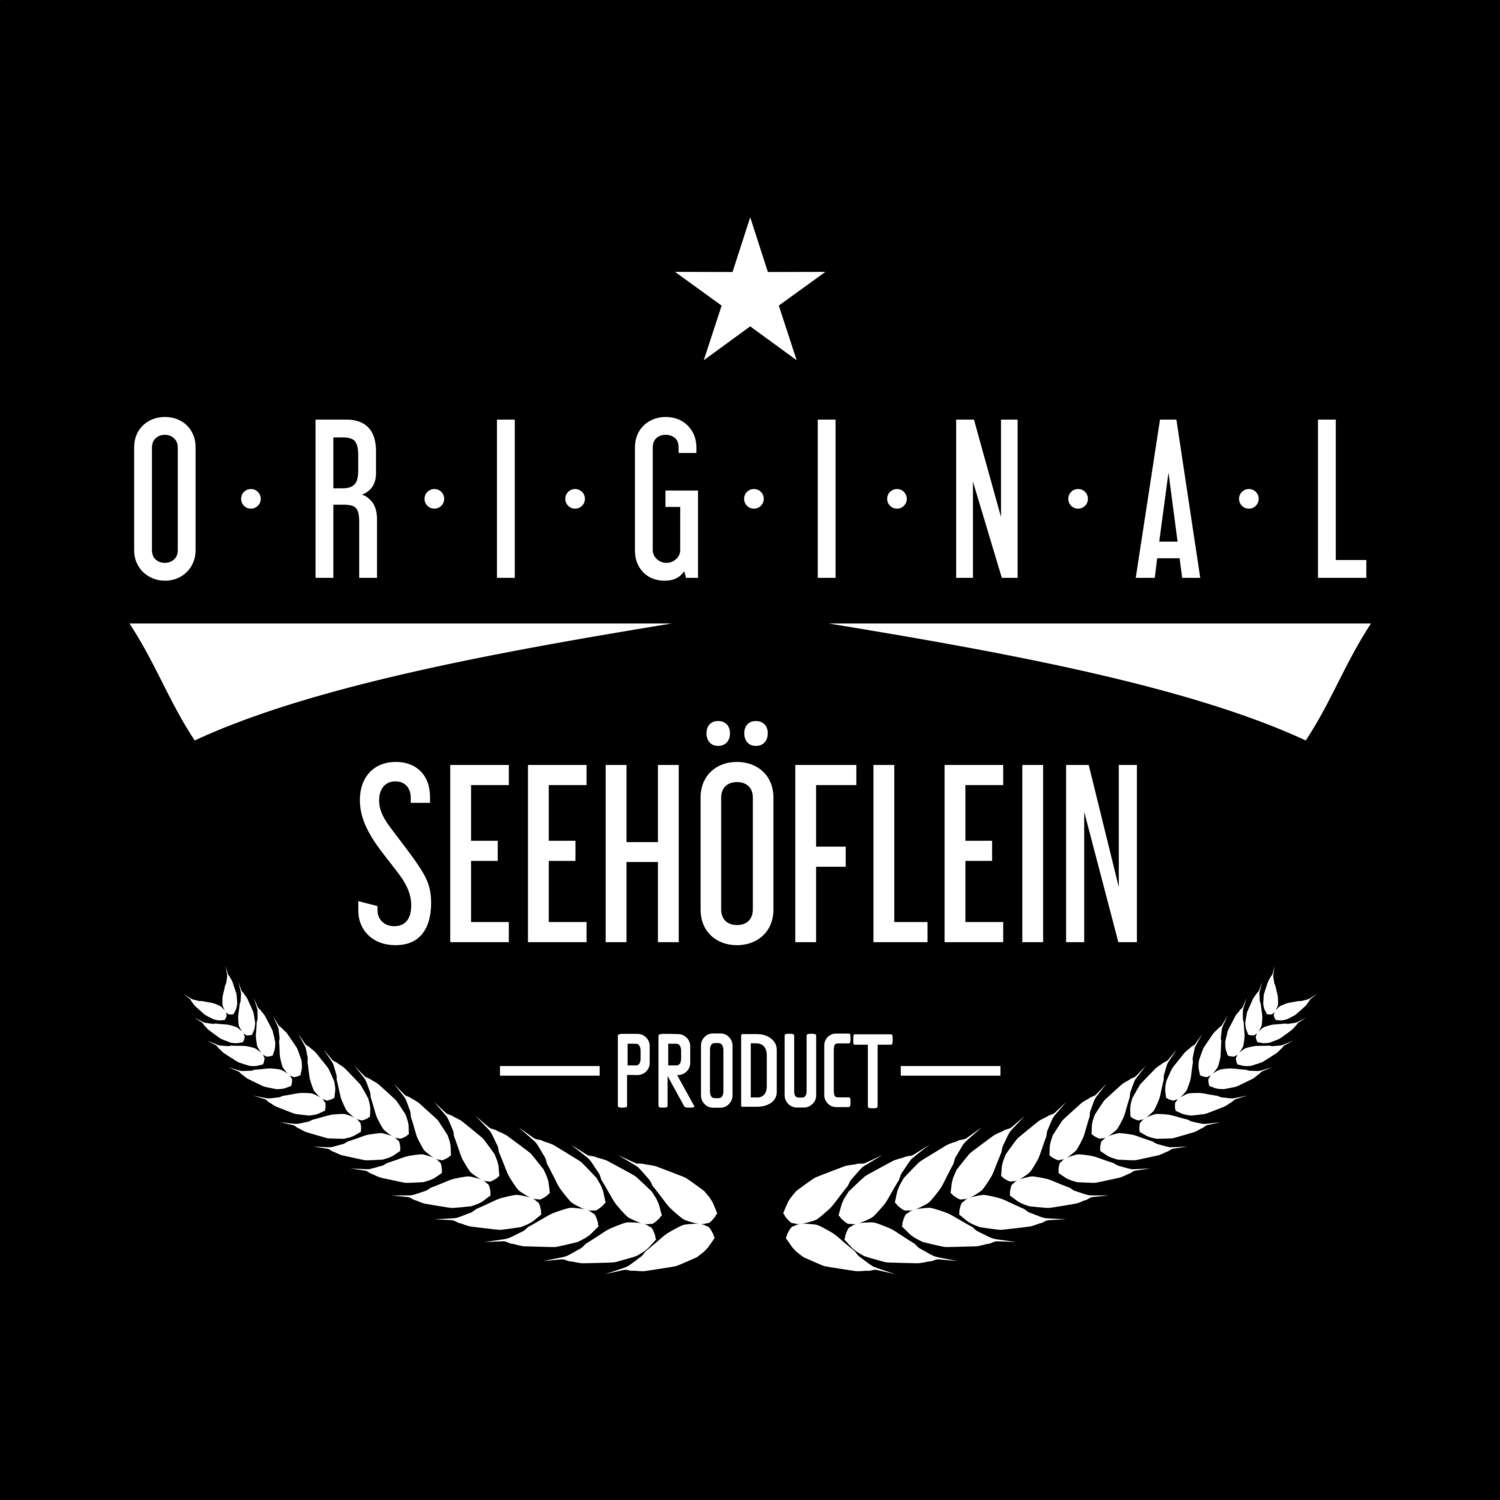 Seehöflein T-Shirt »Original Product«